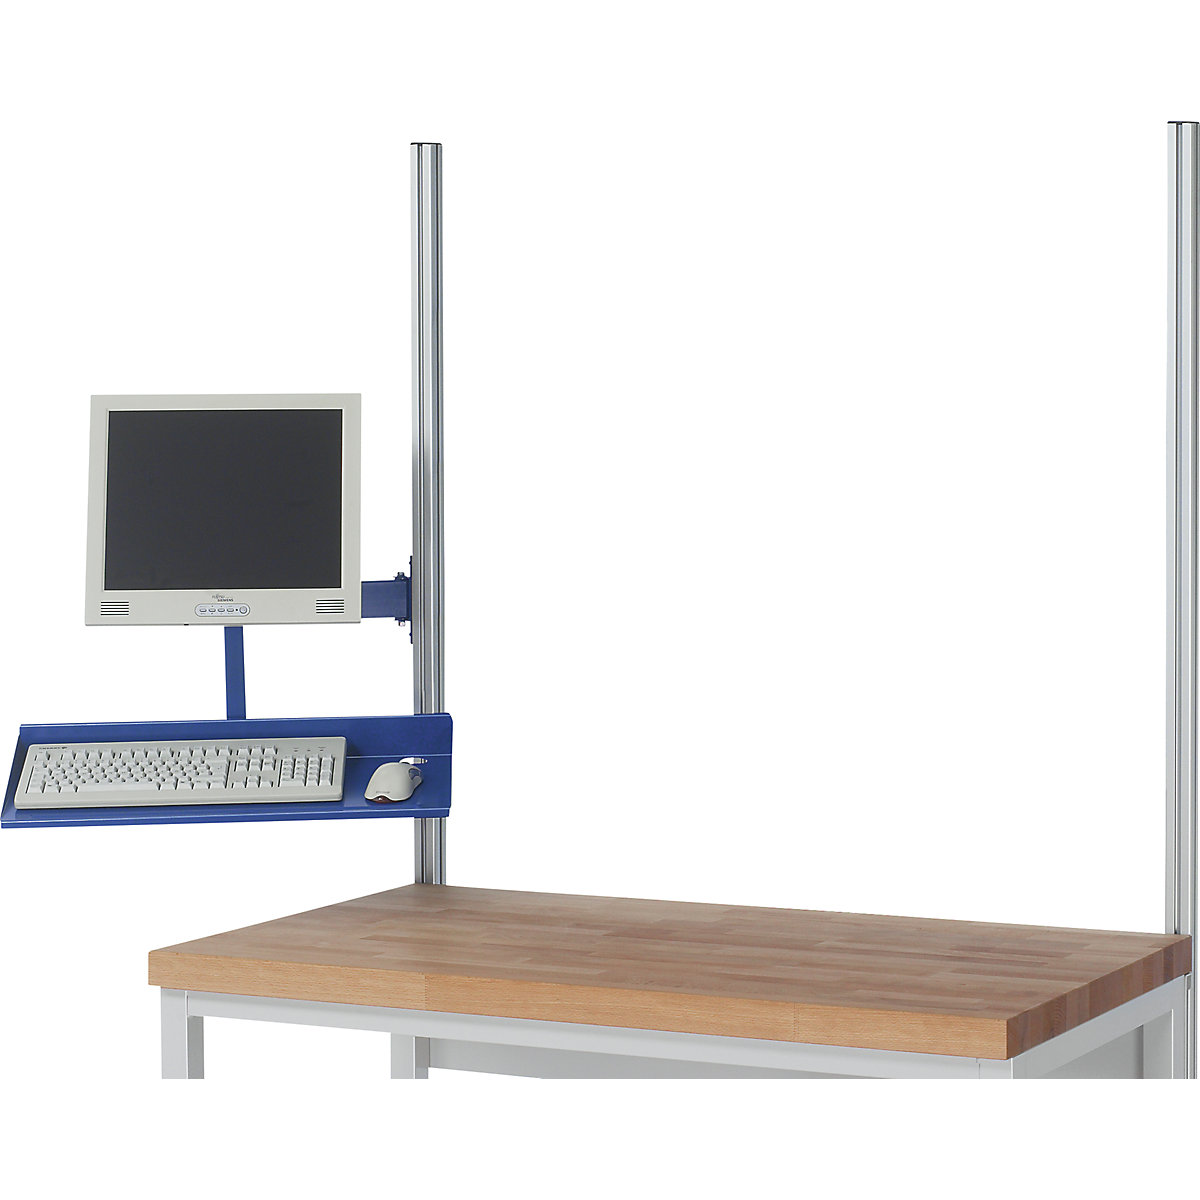 Brazo giratorio para pantalla TFT – RAU, con tabla, carga máx. 15 kg